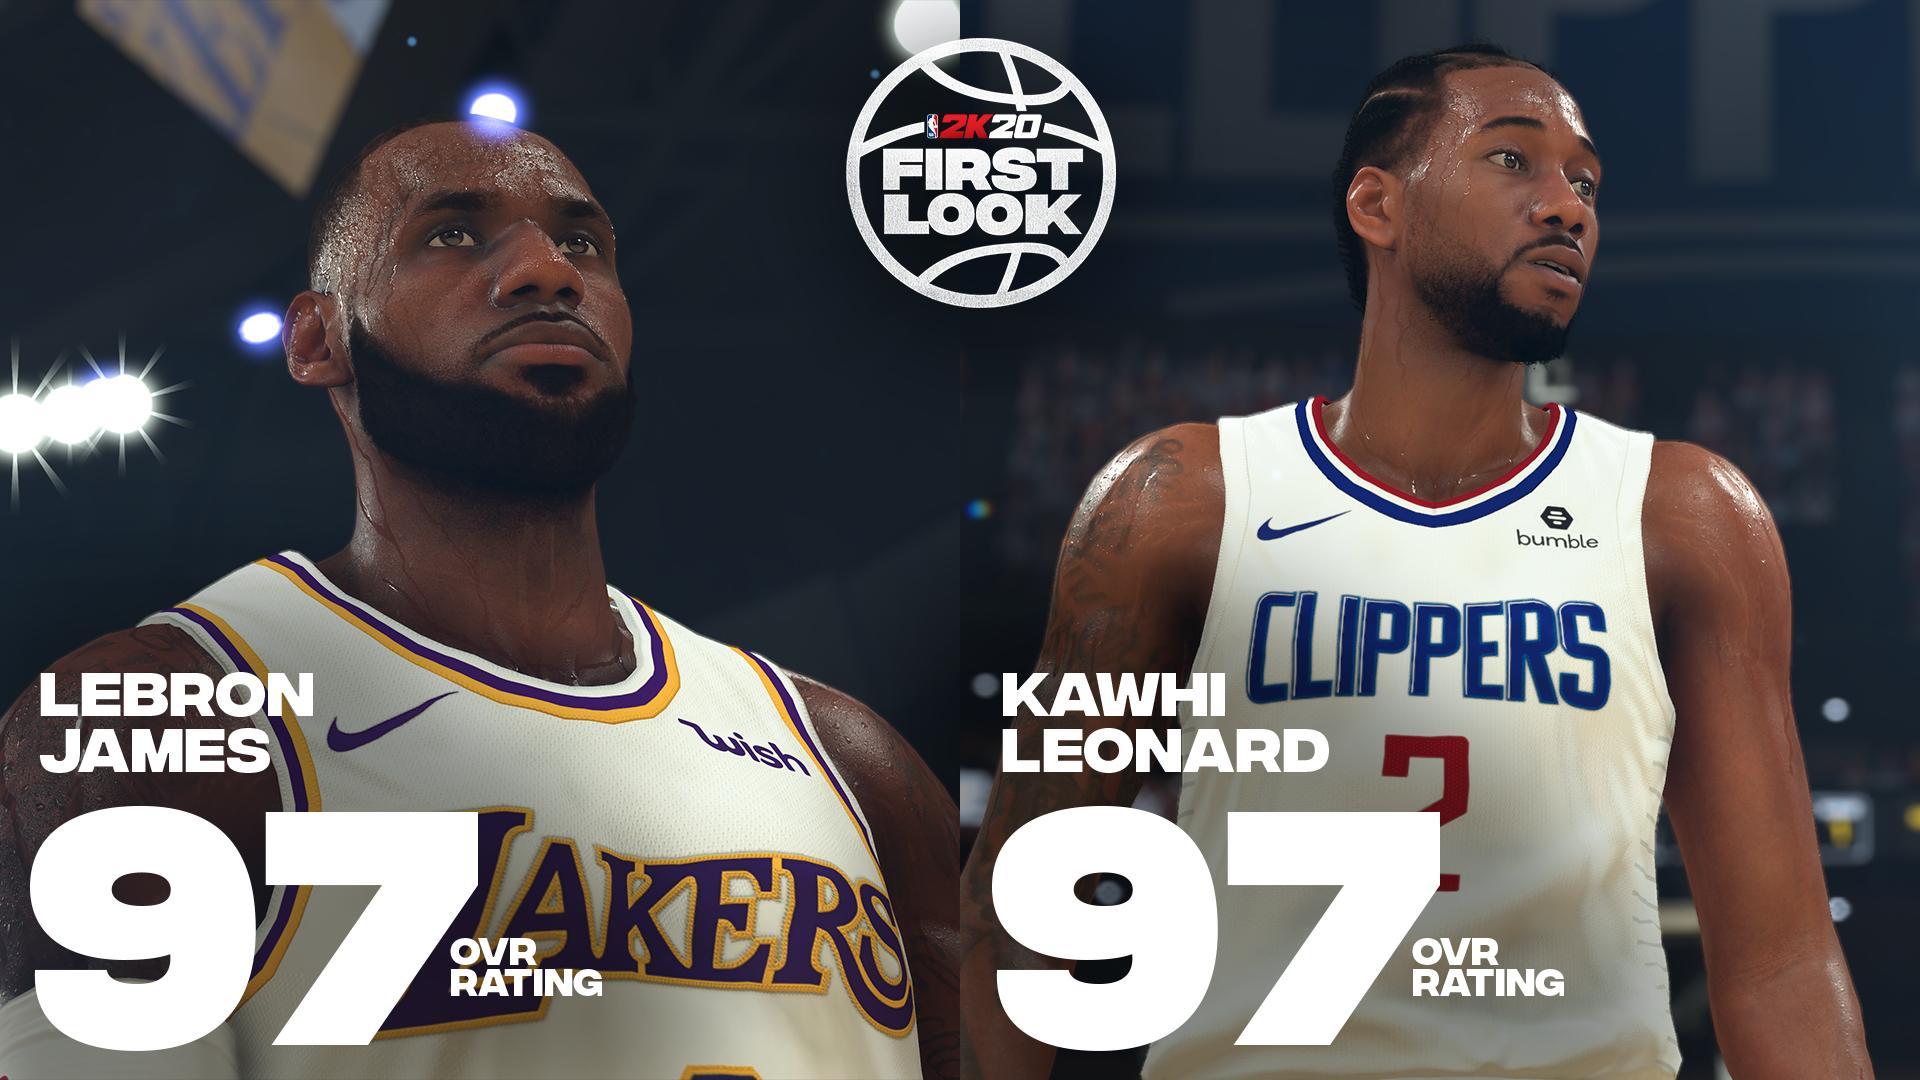 2K Sports Reveal NBA 2K20 Player Ratings Via An Interactive